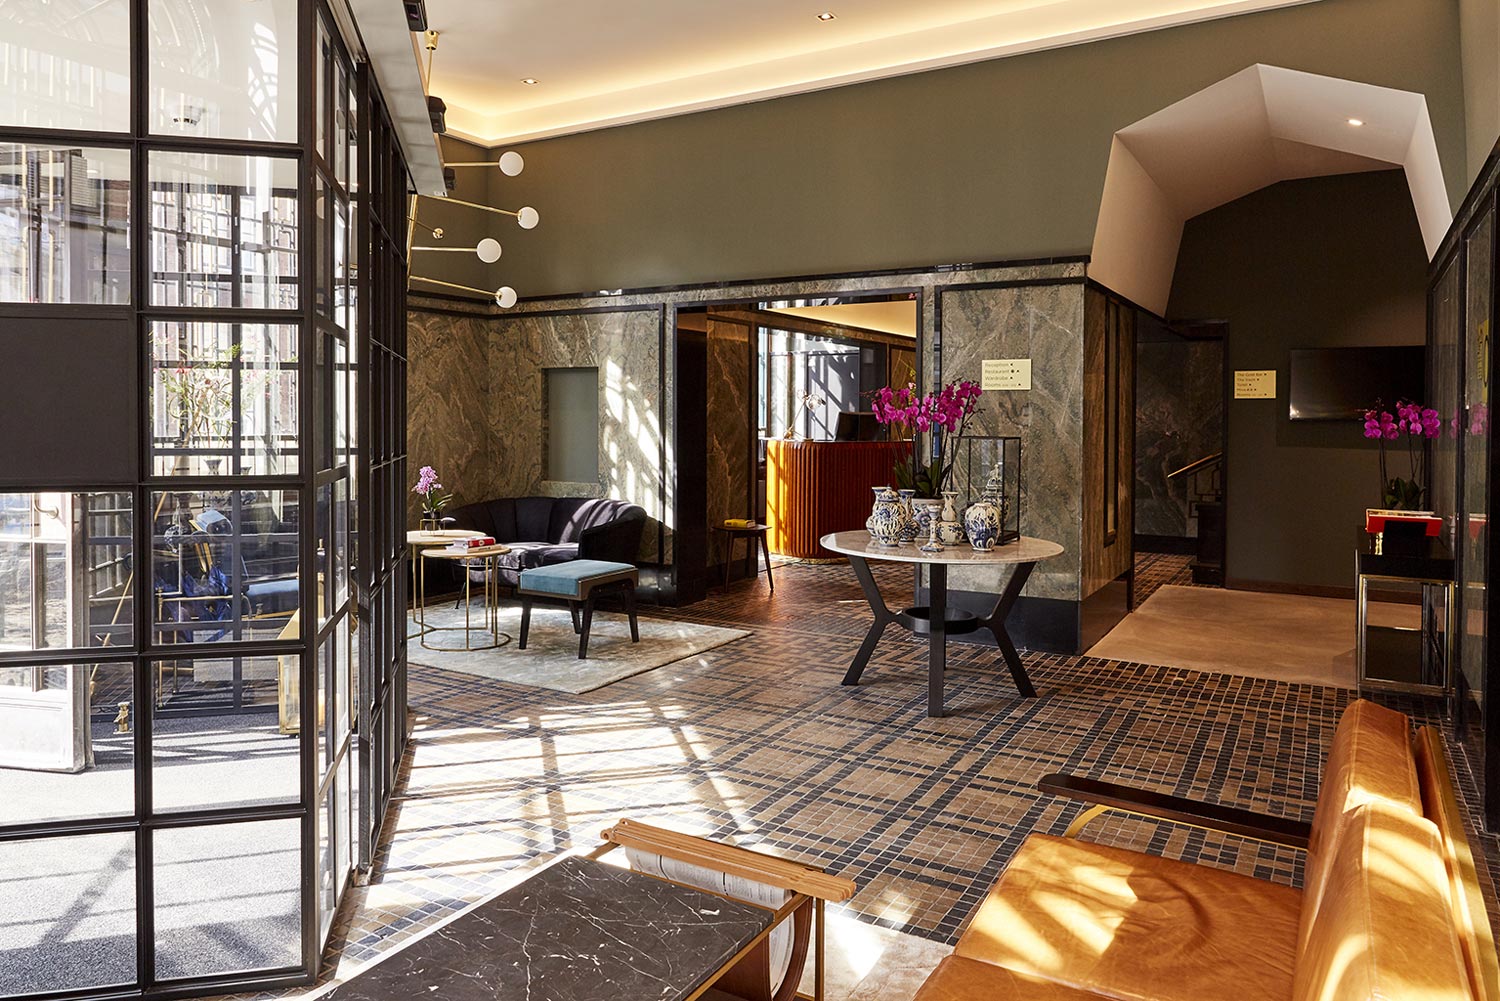 Interior Design Blog | Project Of The Week - Hotel Indigo, The Hague | SBID